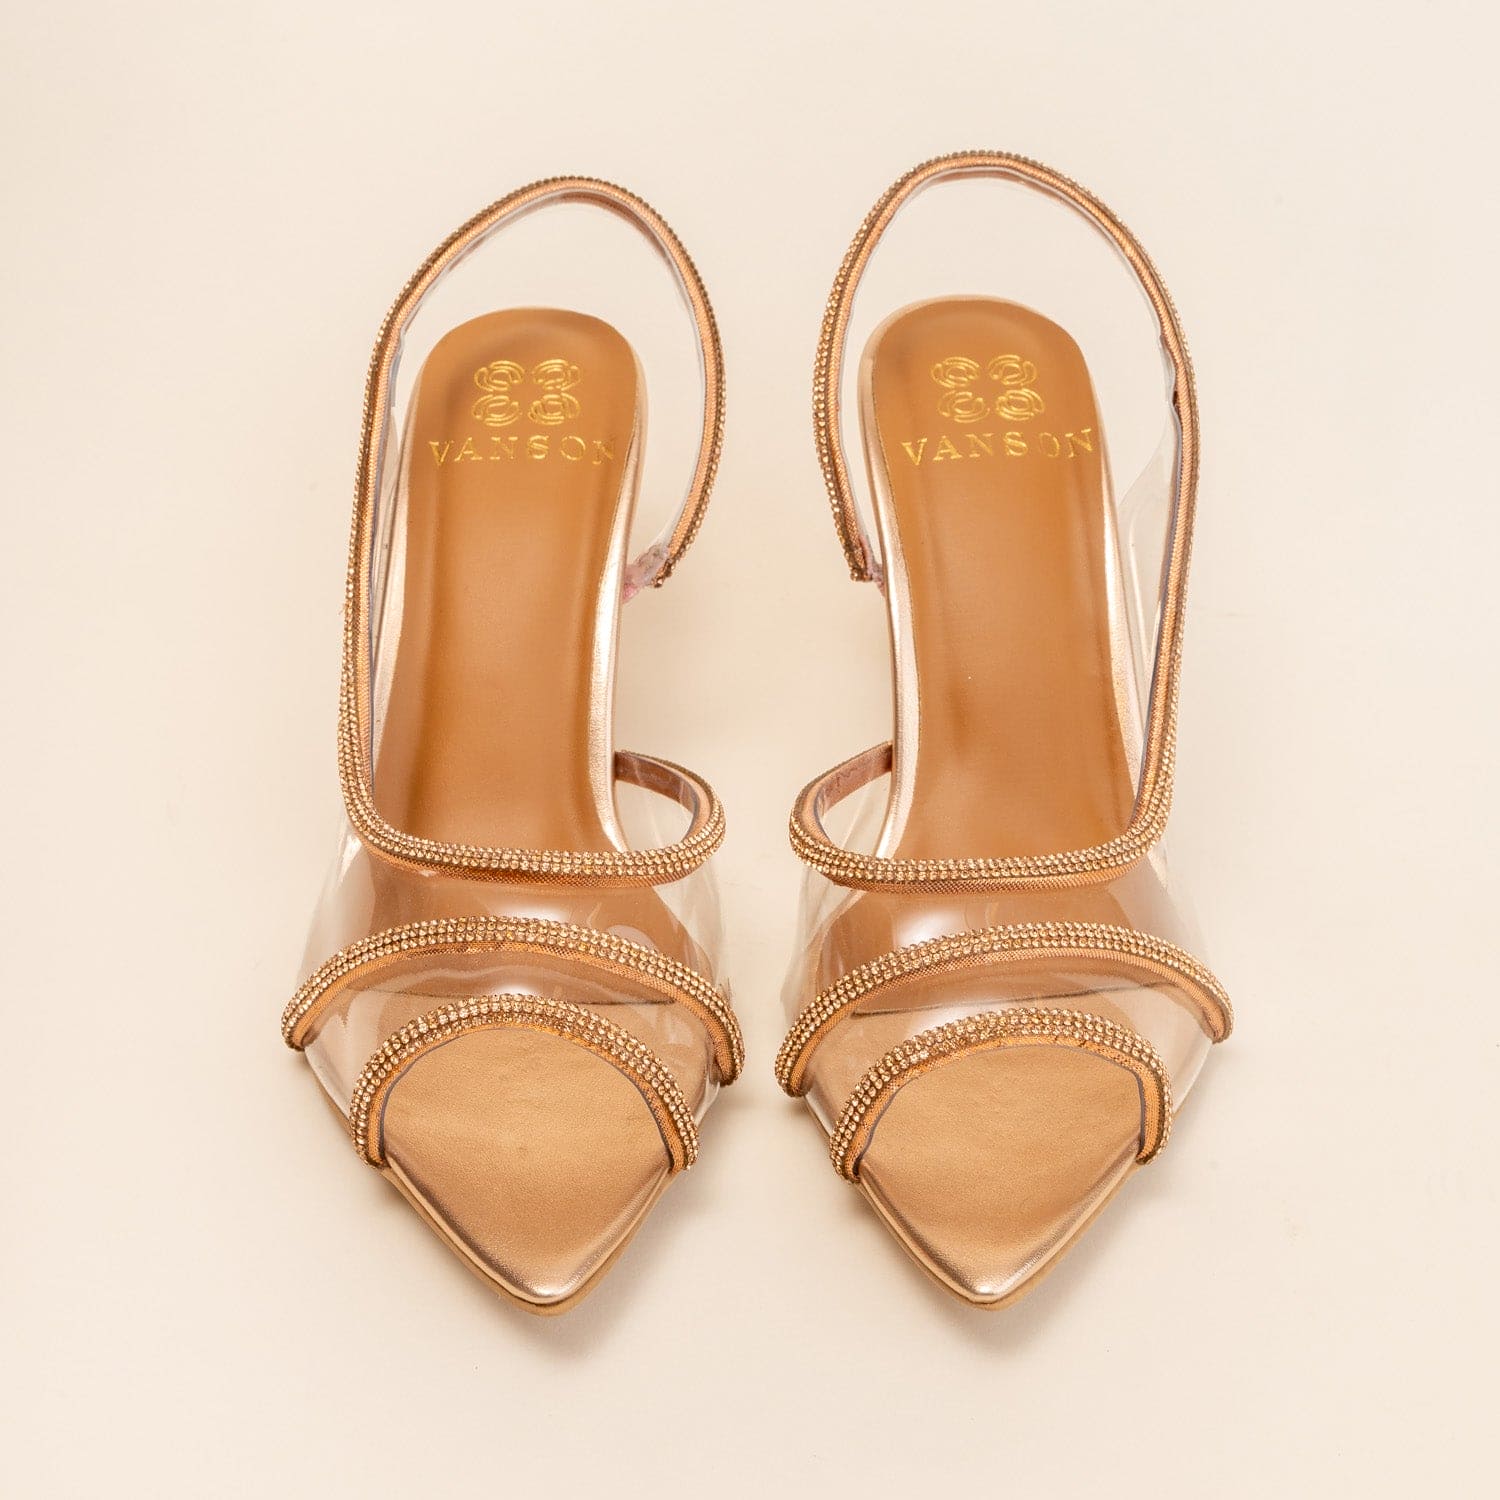 Sunbeam Sandals”- In Rose gold colour